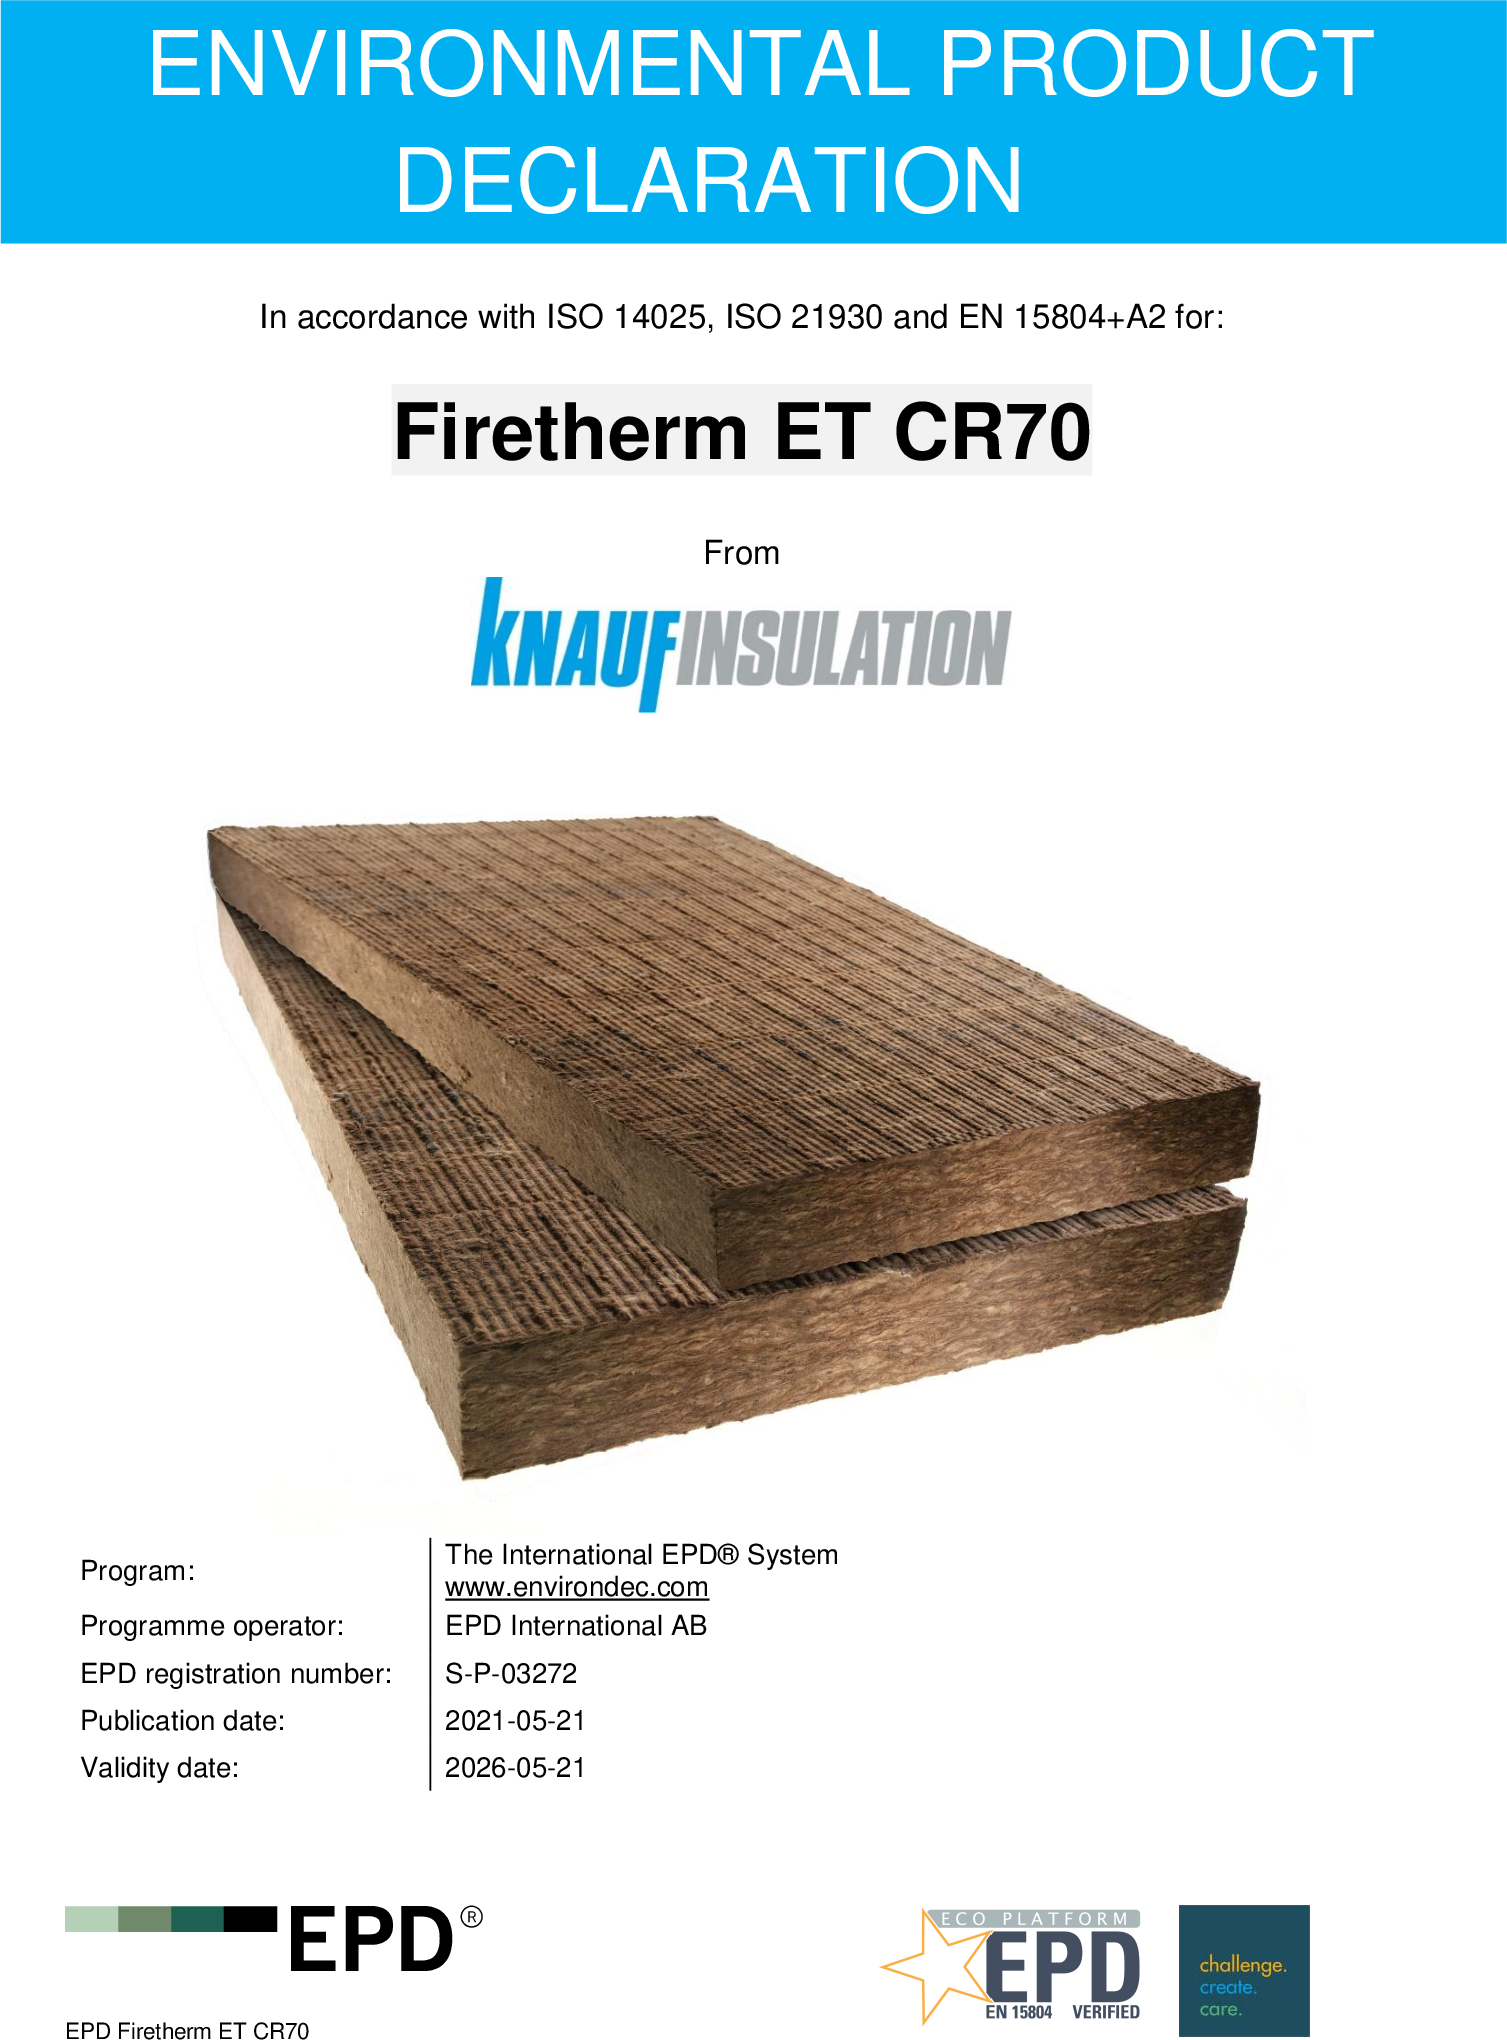 Firetherm ET CR70